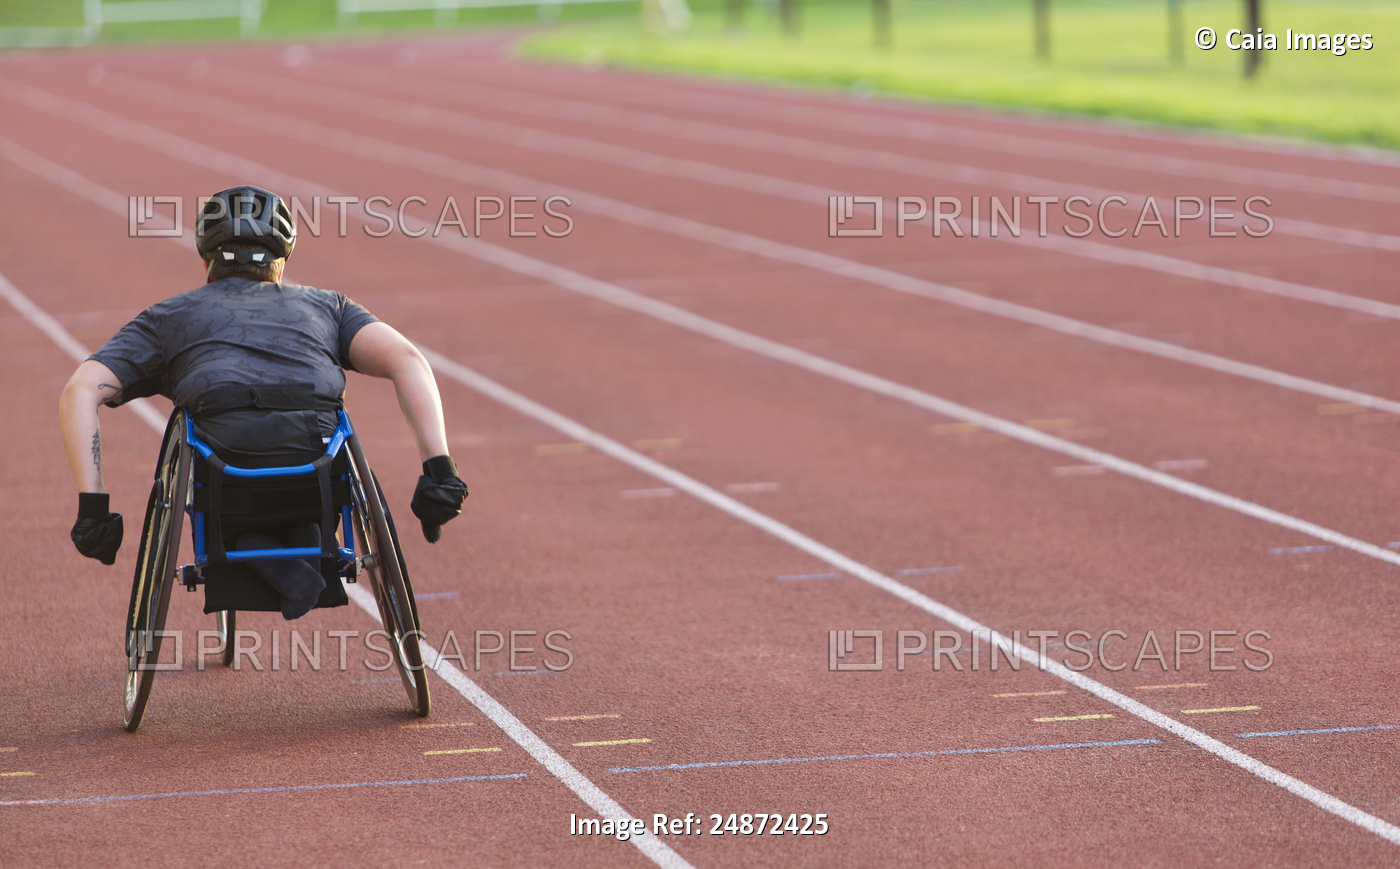 Female paraplegic athlete speeding along sports track in wheelchair race